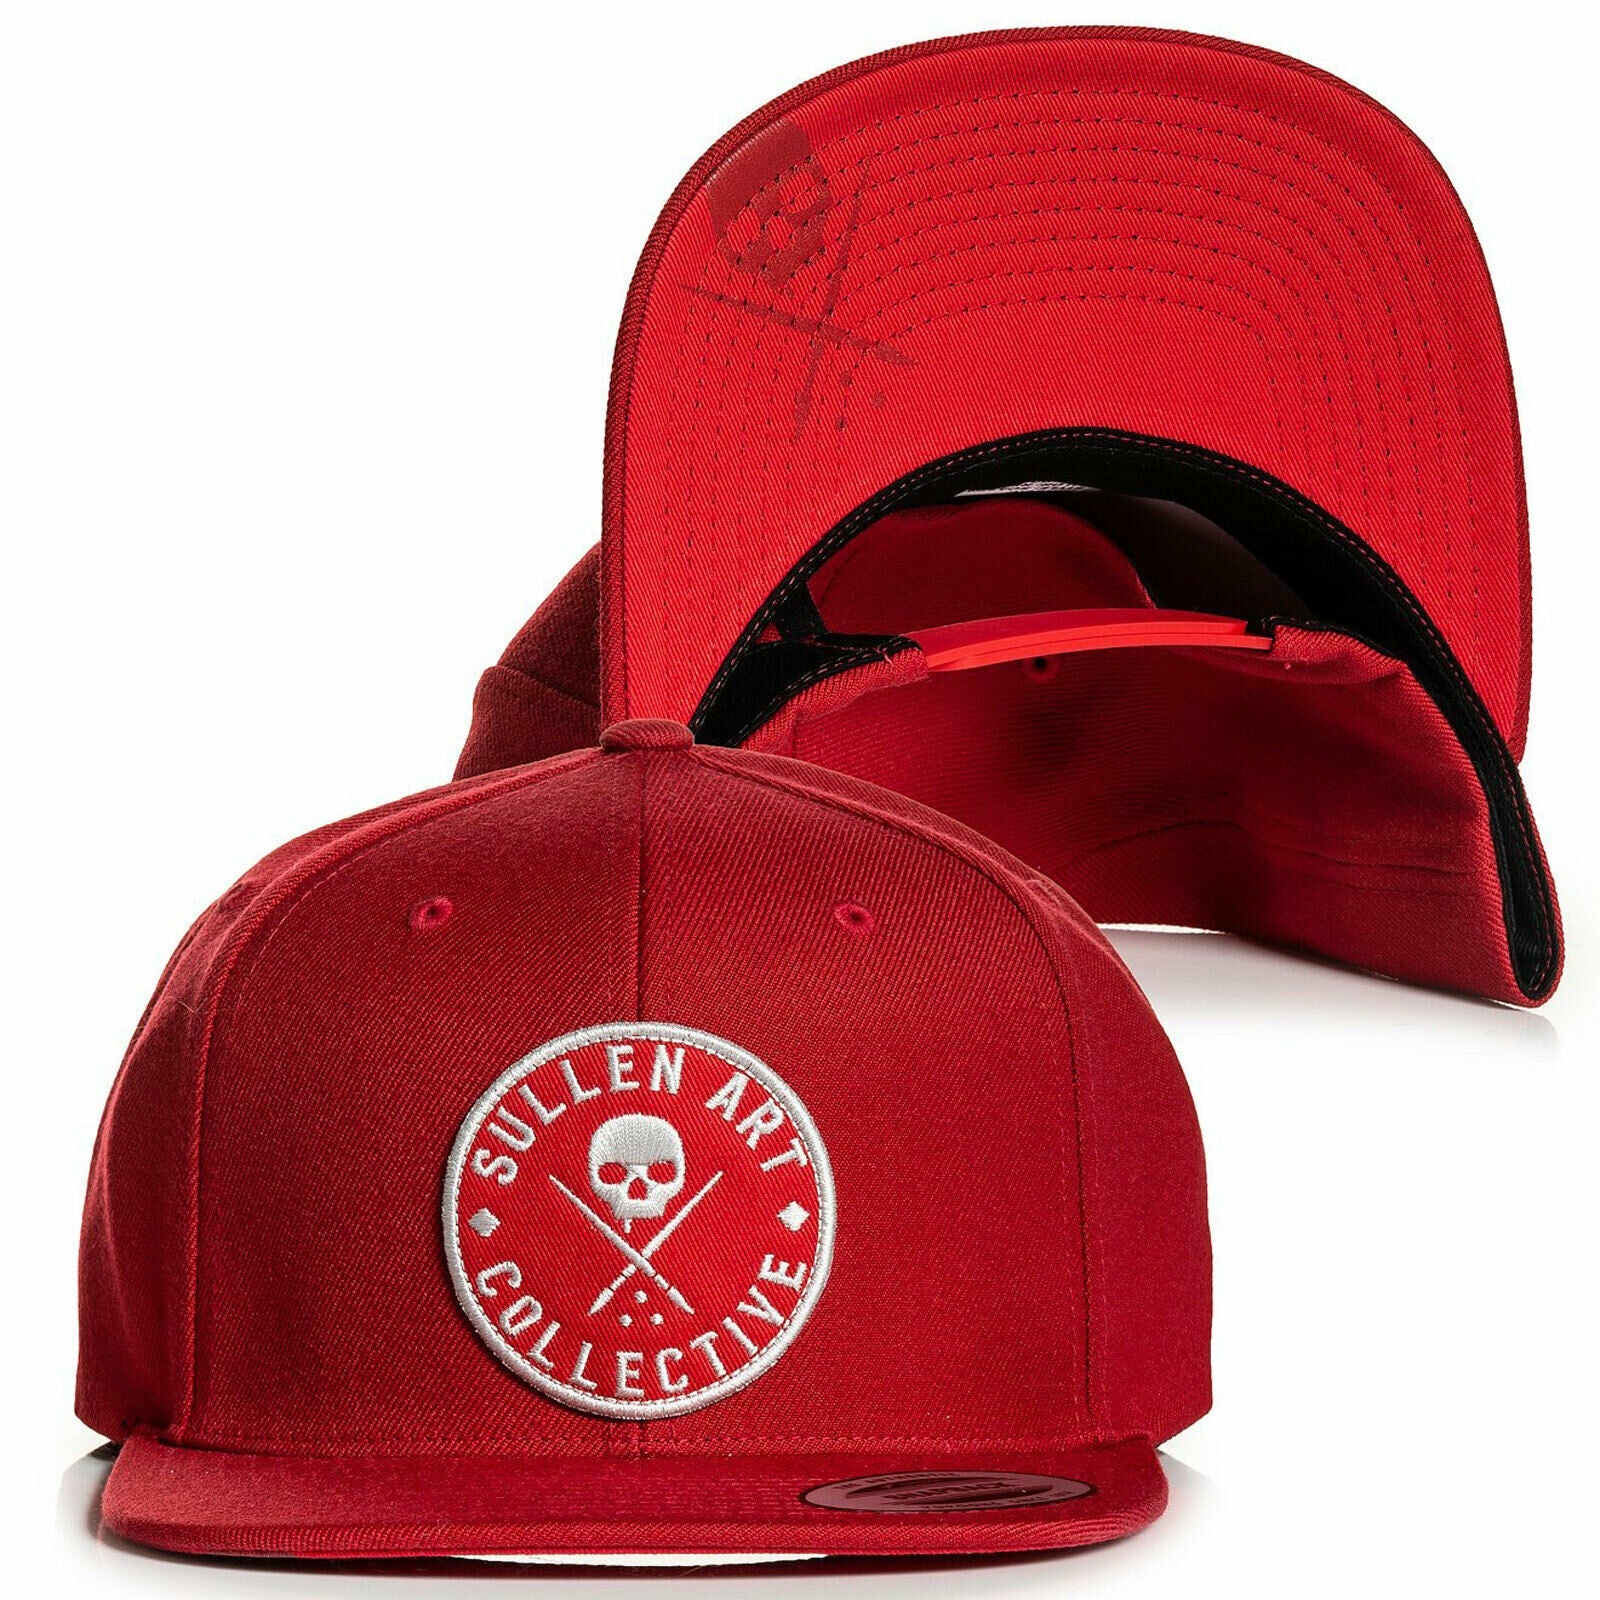 Hallmark Red Snapback Cap-Mens Beanies, Hats & Snapback Caps-Scarlett Dawn